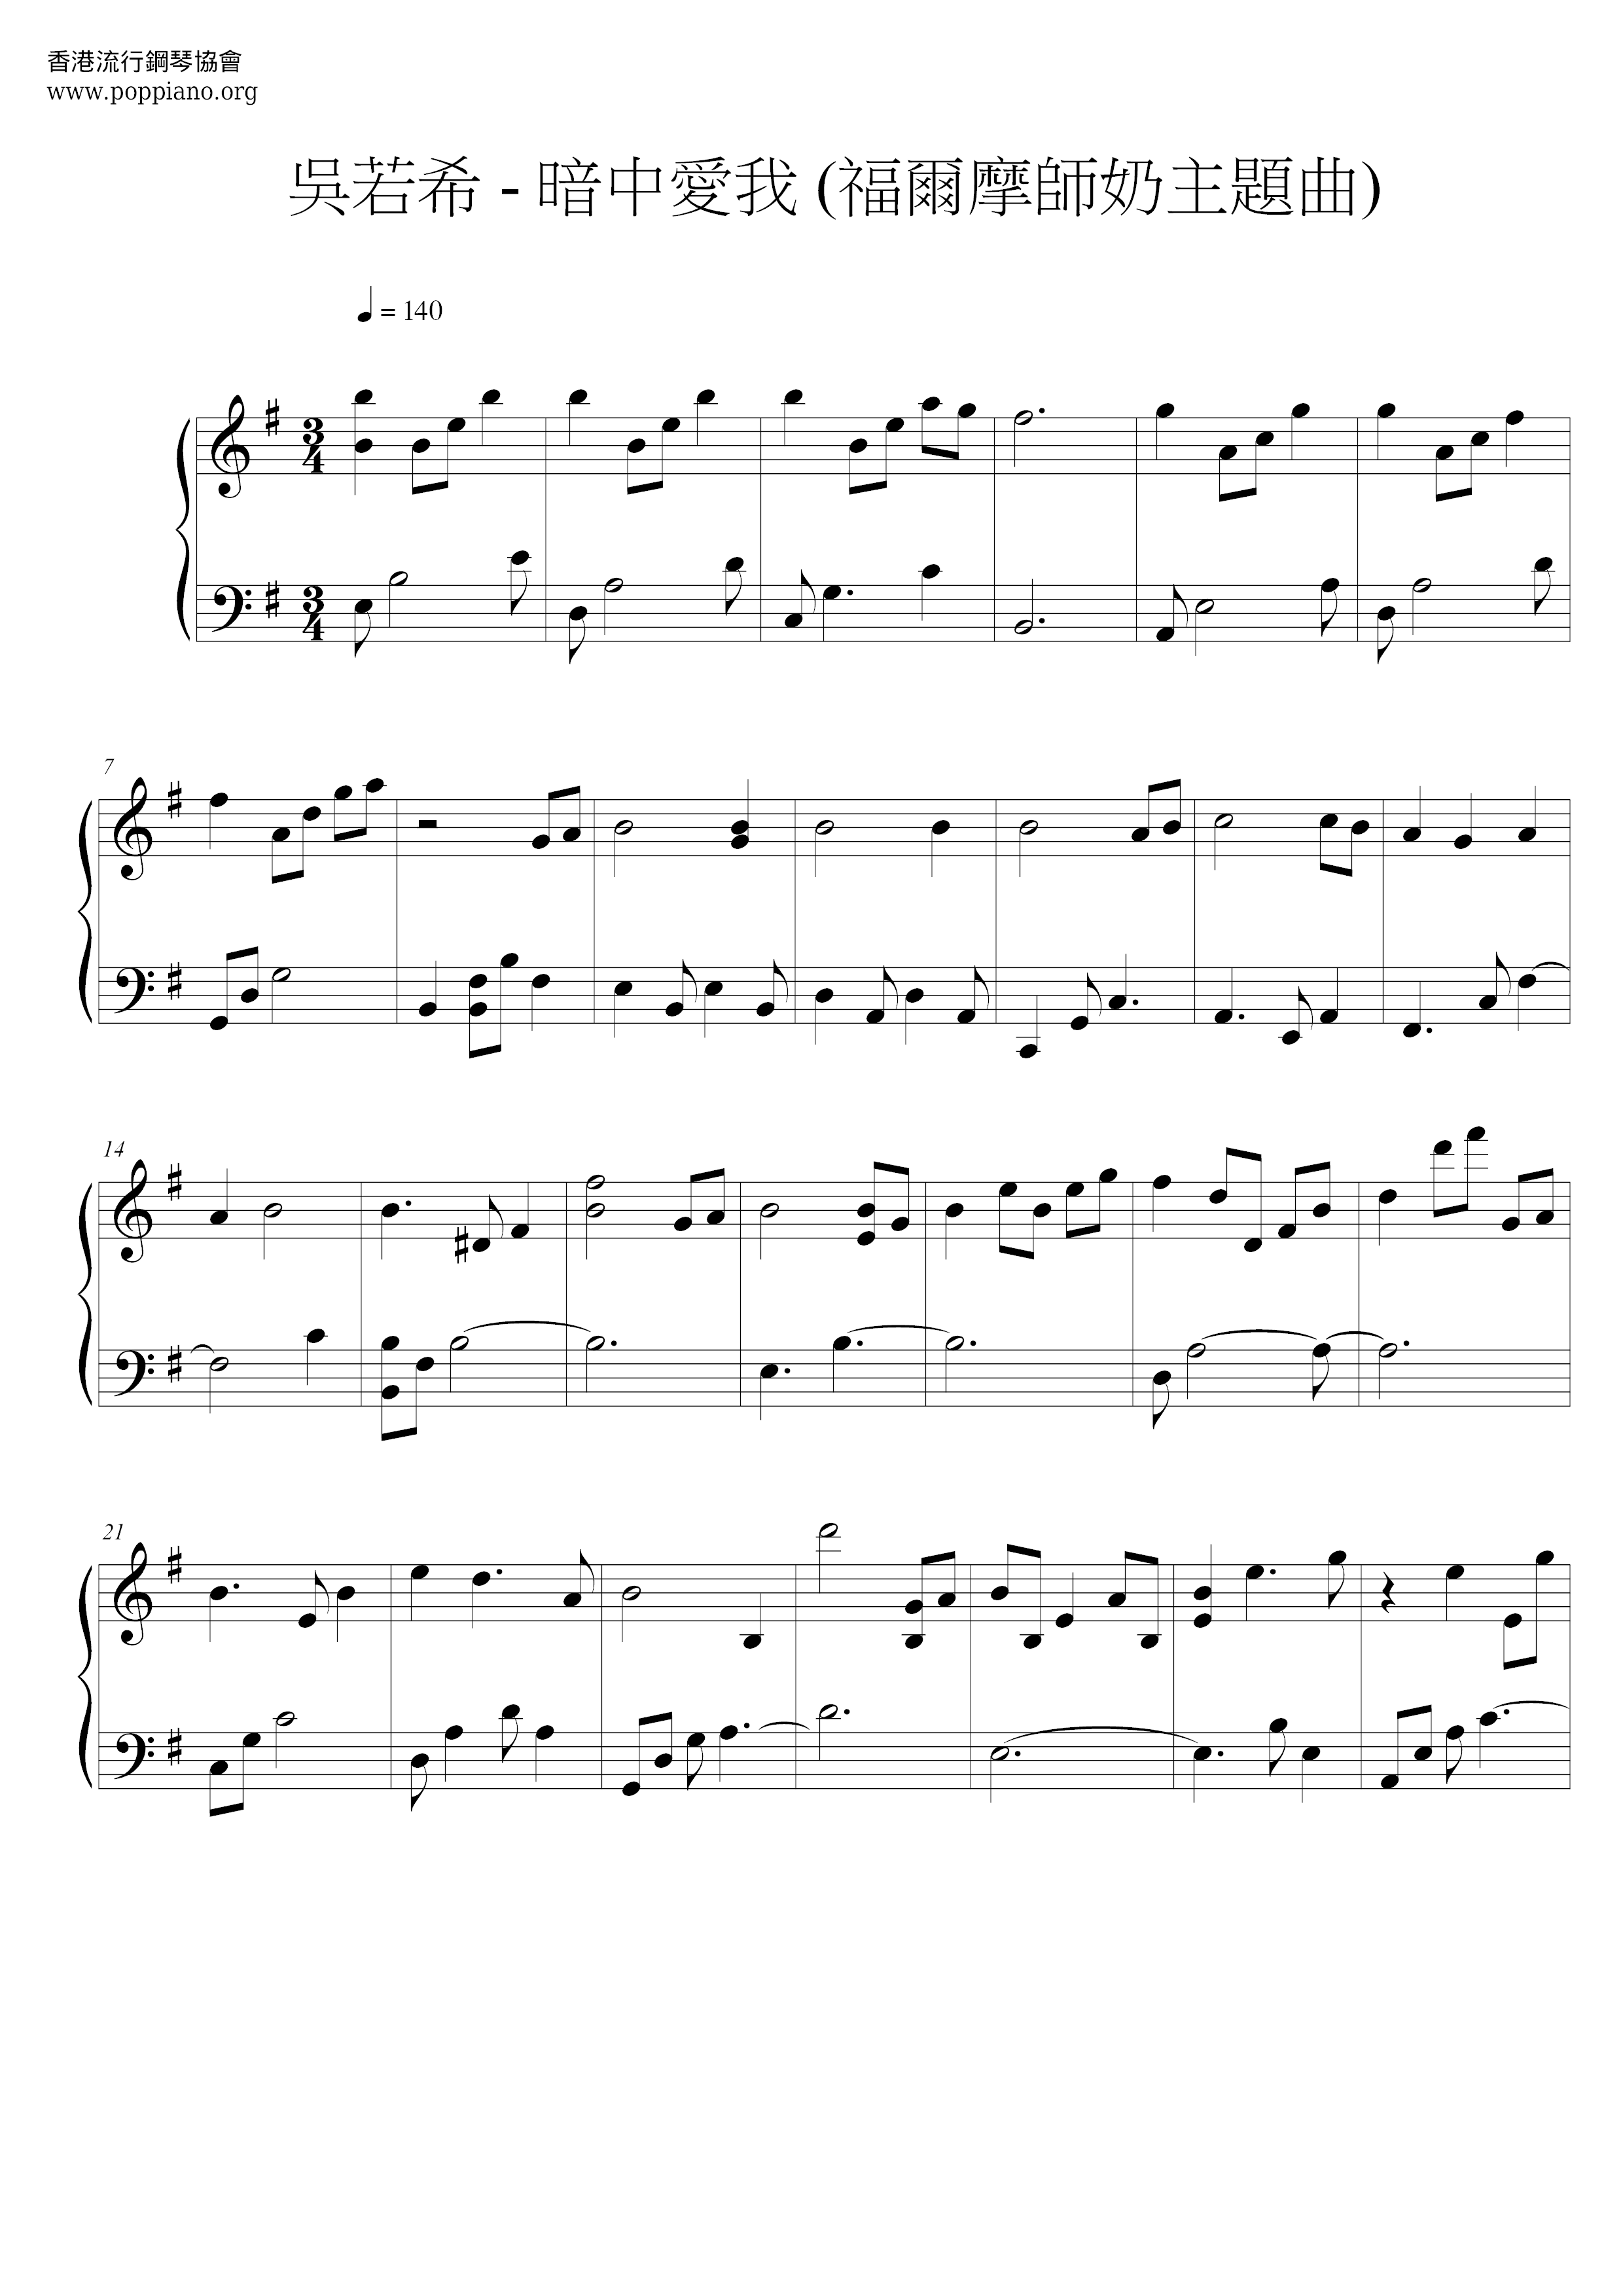 Holmes Theme Song) Score